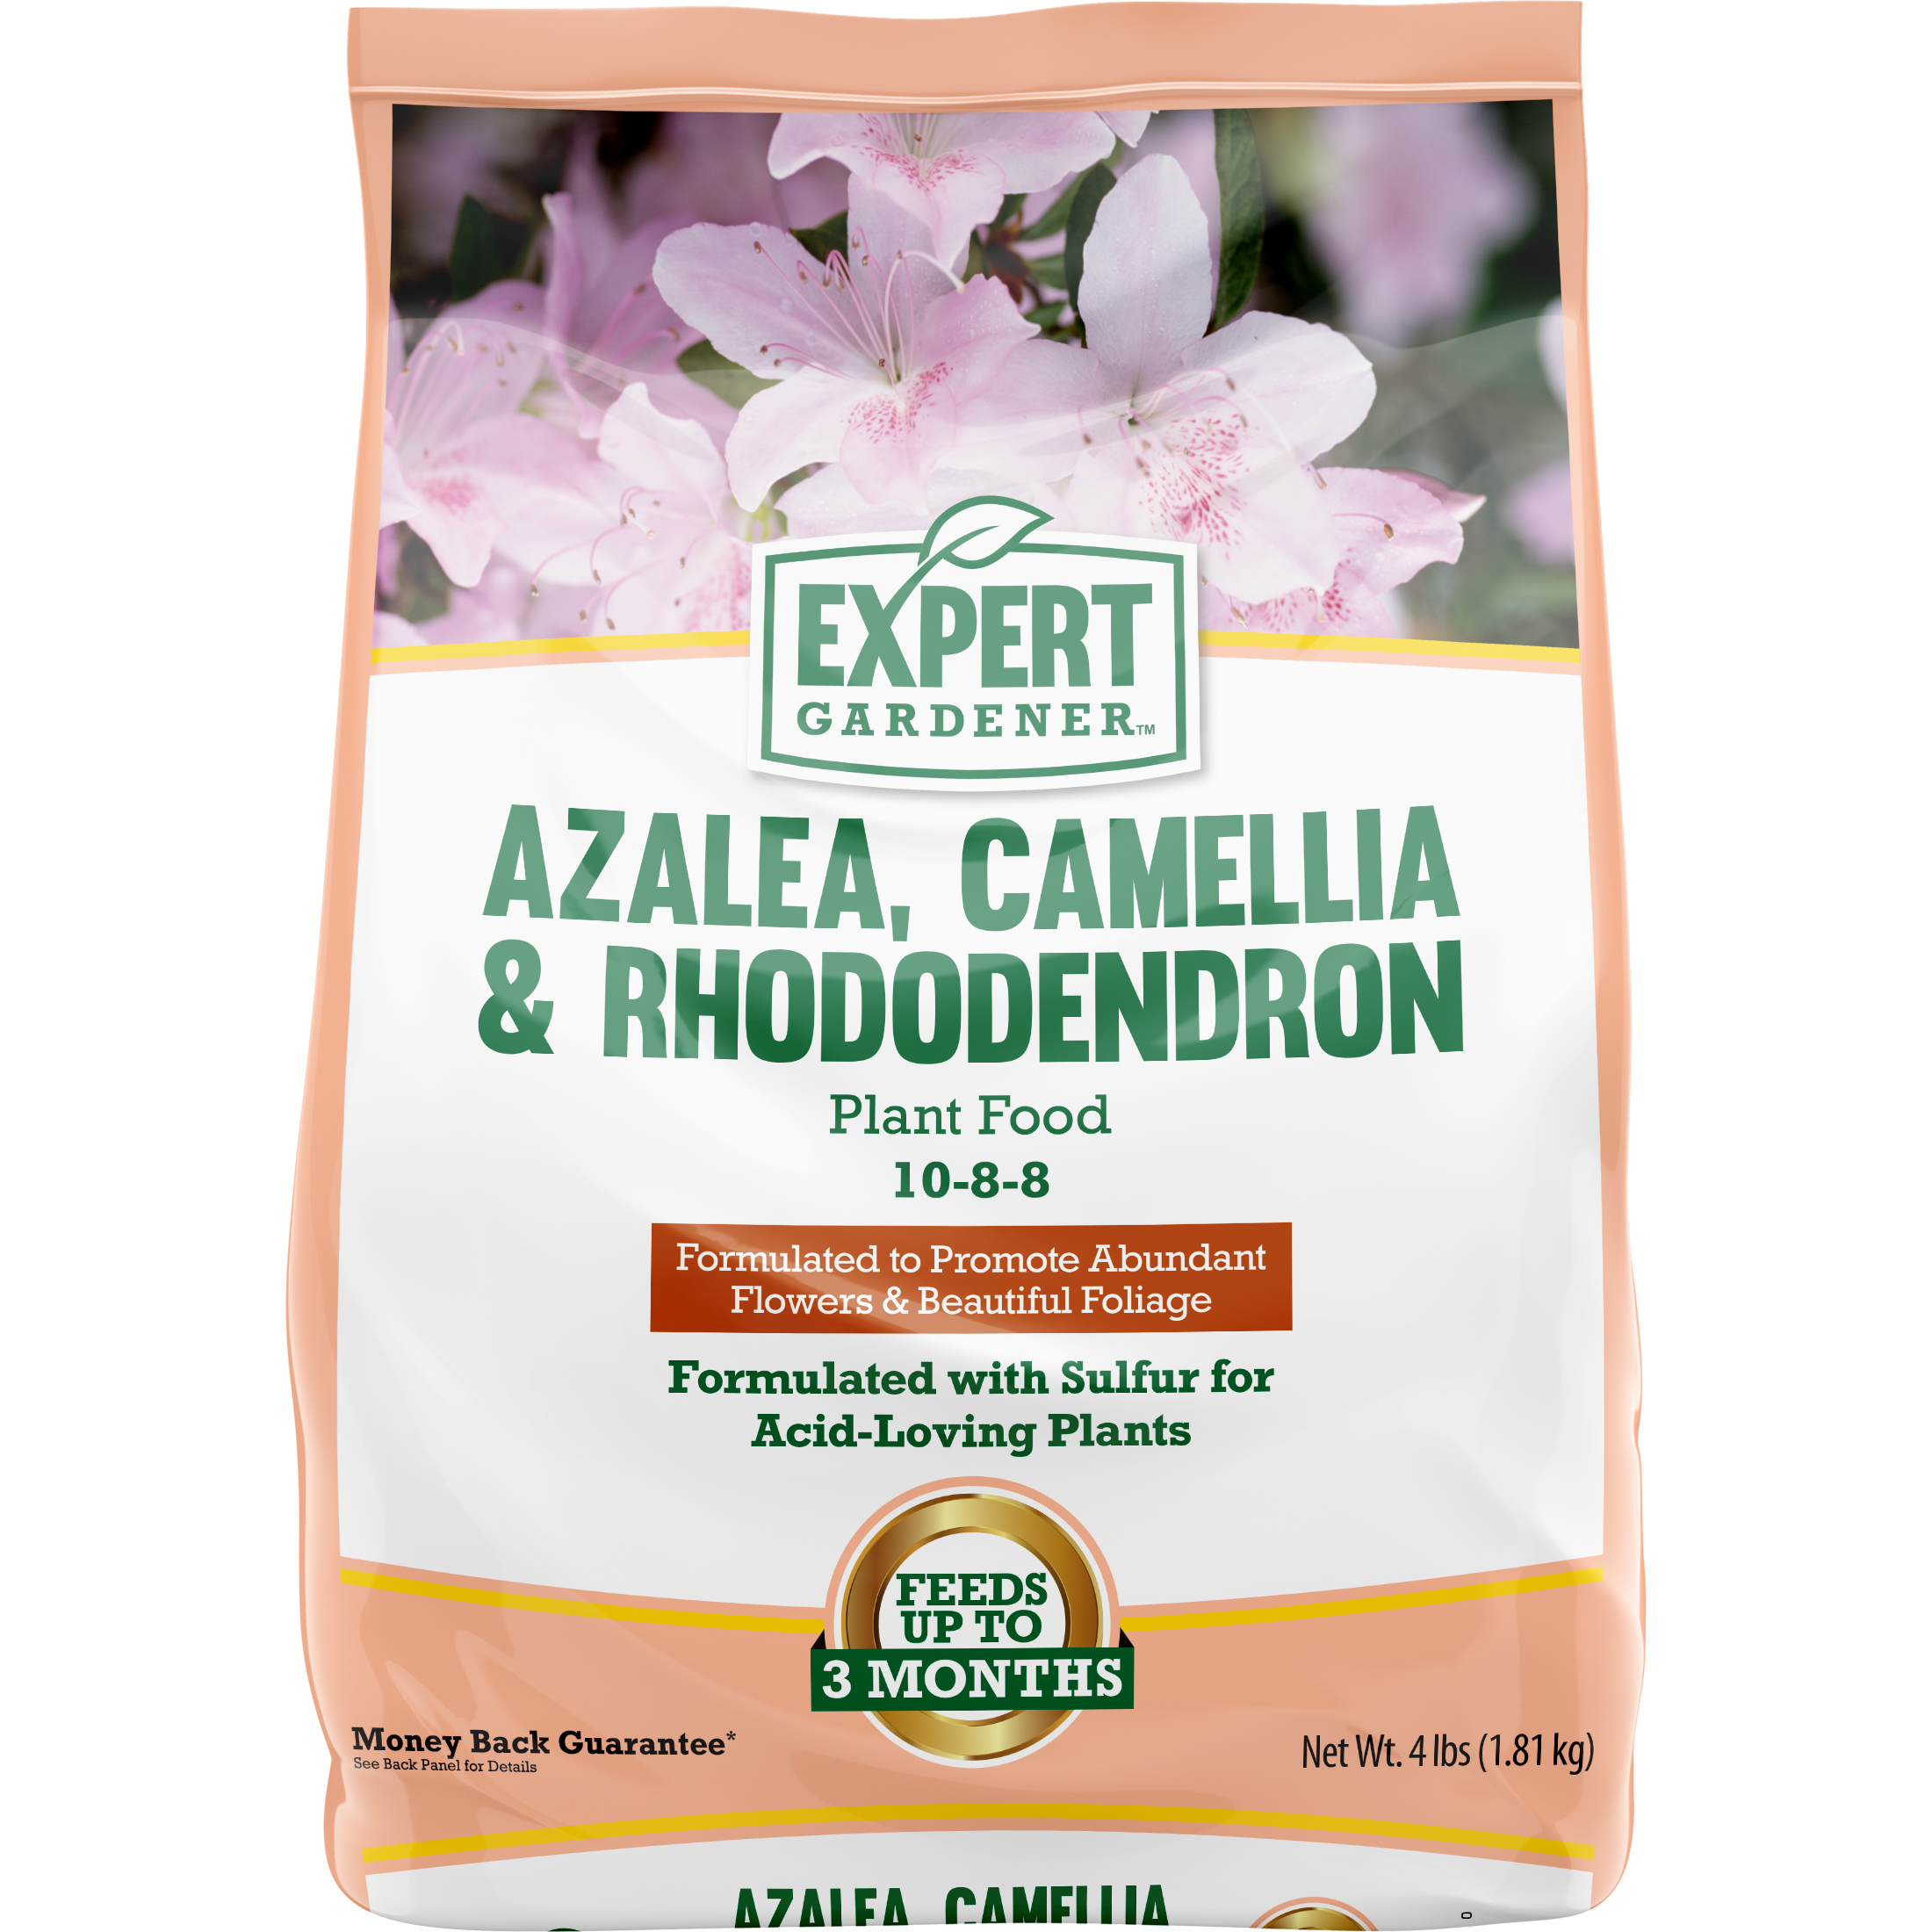 Expert Gardener Azalea, Camellia & Rhododendron Plant Food Fertilizer 10-8-8, 4 lb. - image 1 of 8